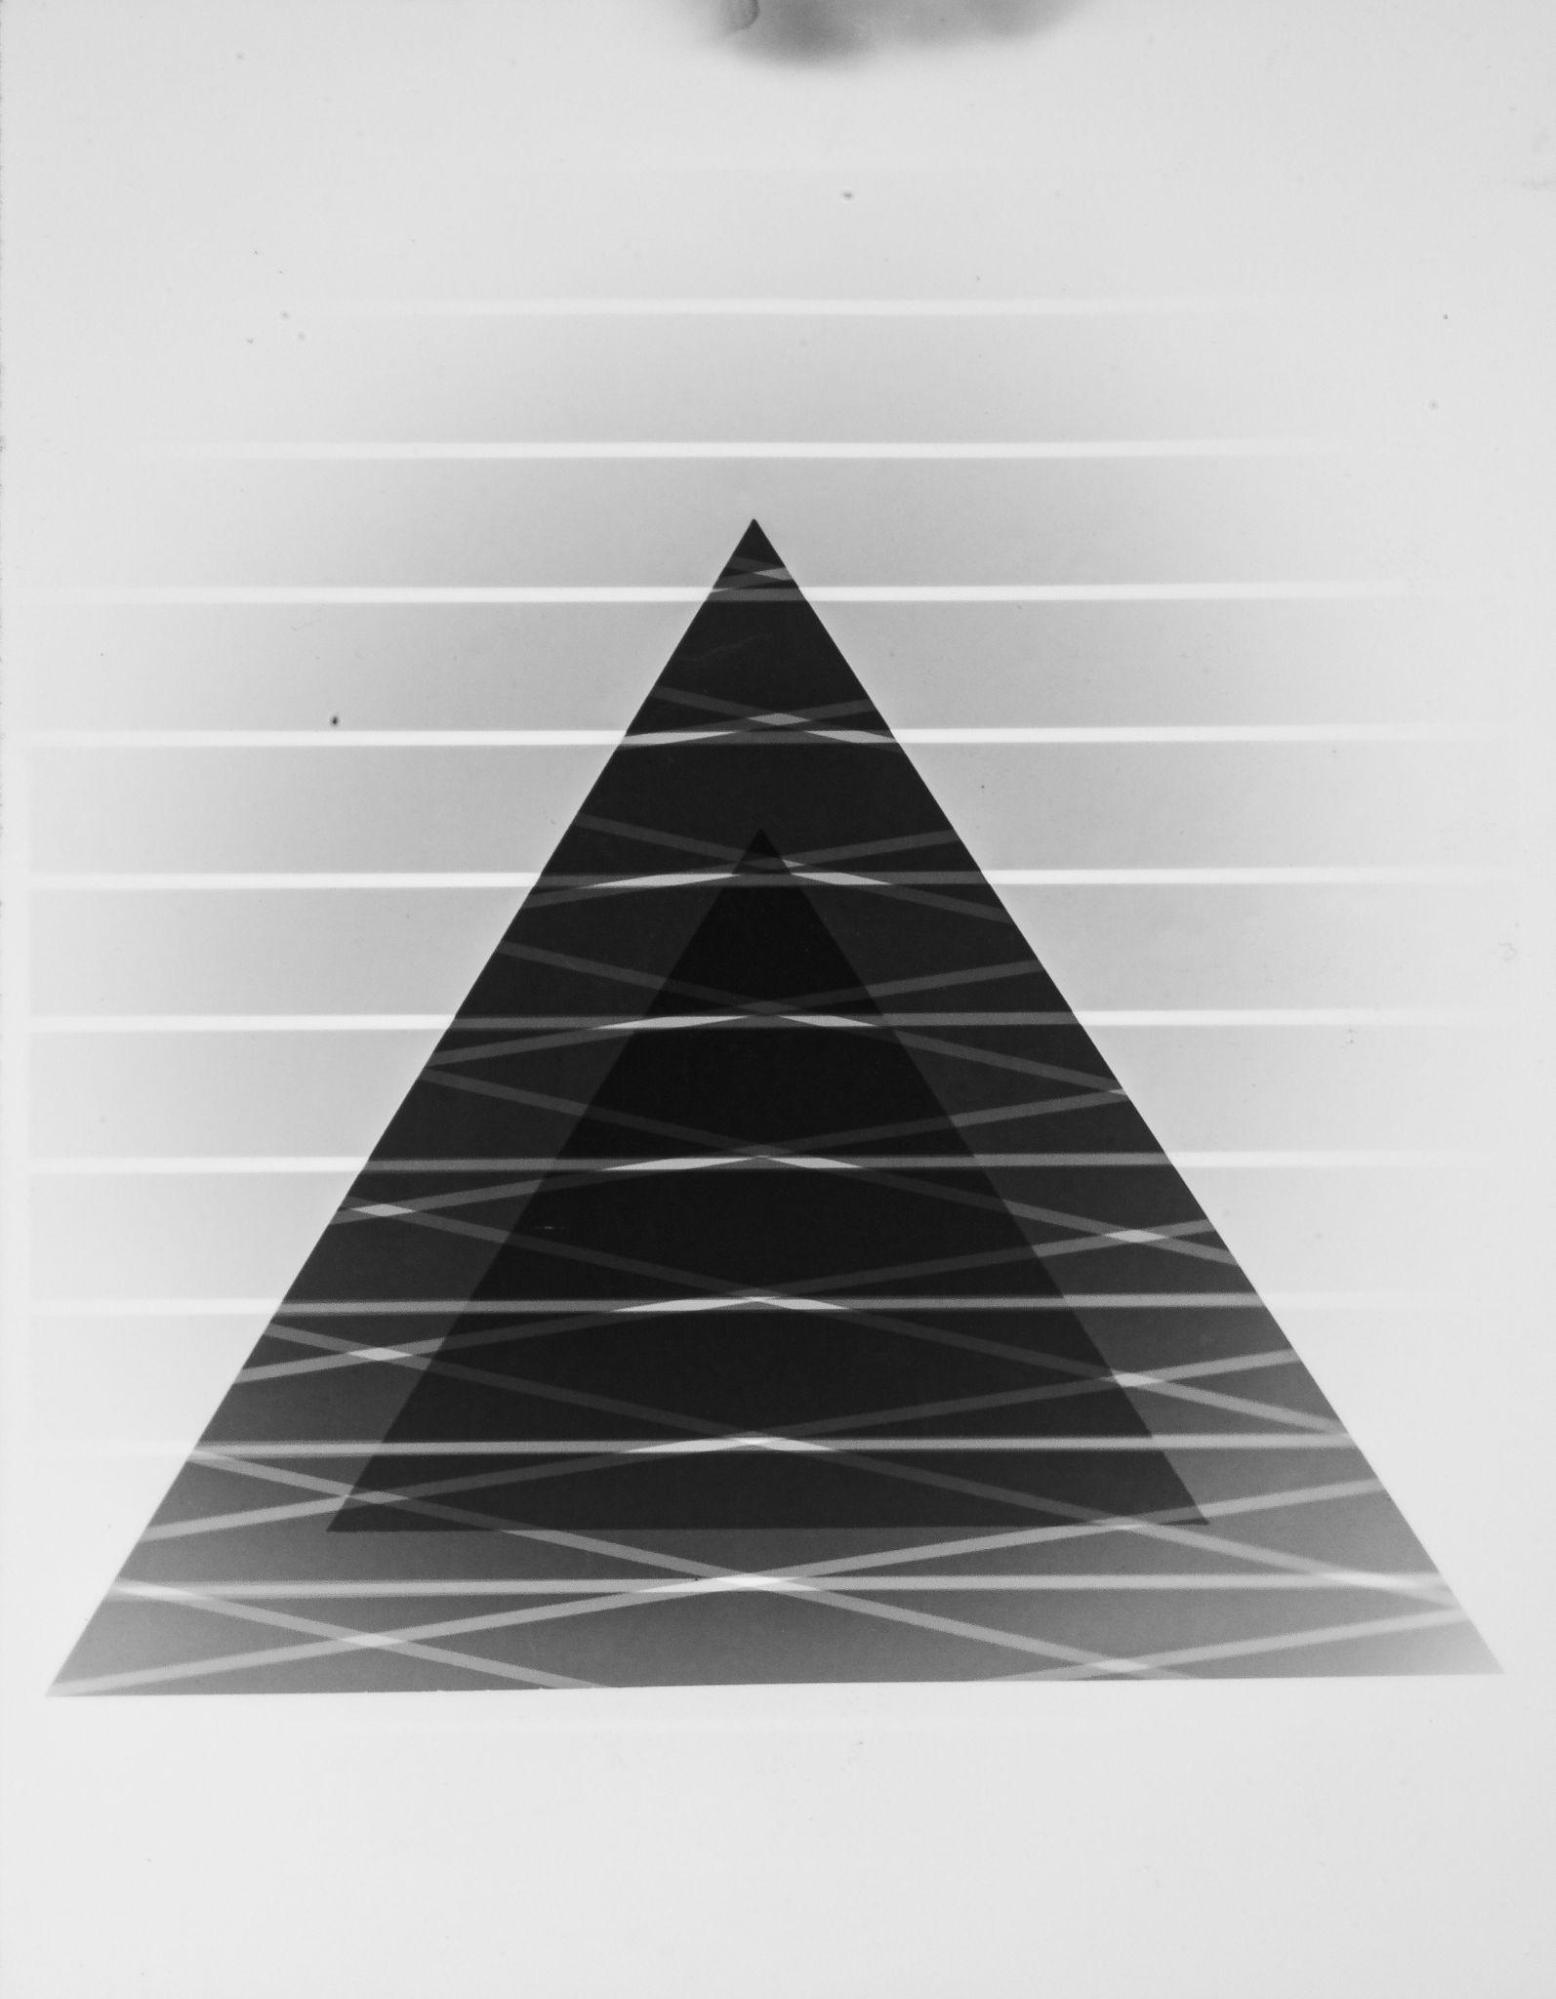 Juan Fernandez, Pyramid Scheme (Negative), 2021, Laminated silver gelatin print mounted on masonite, 14” x 11” x 1”